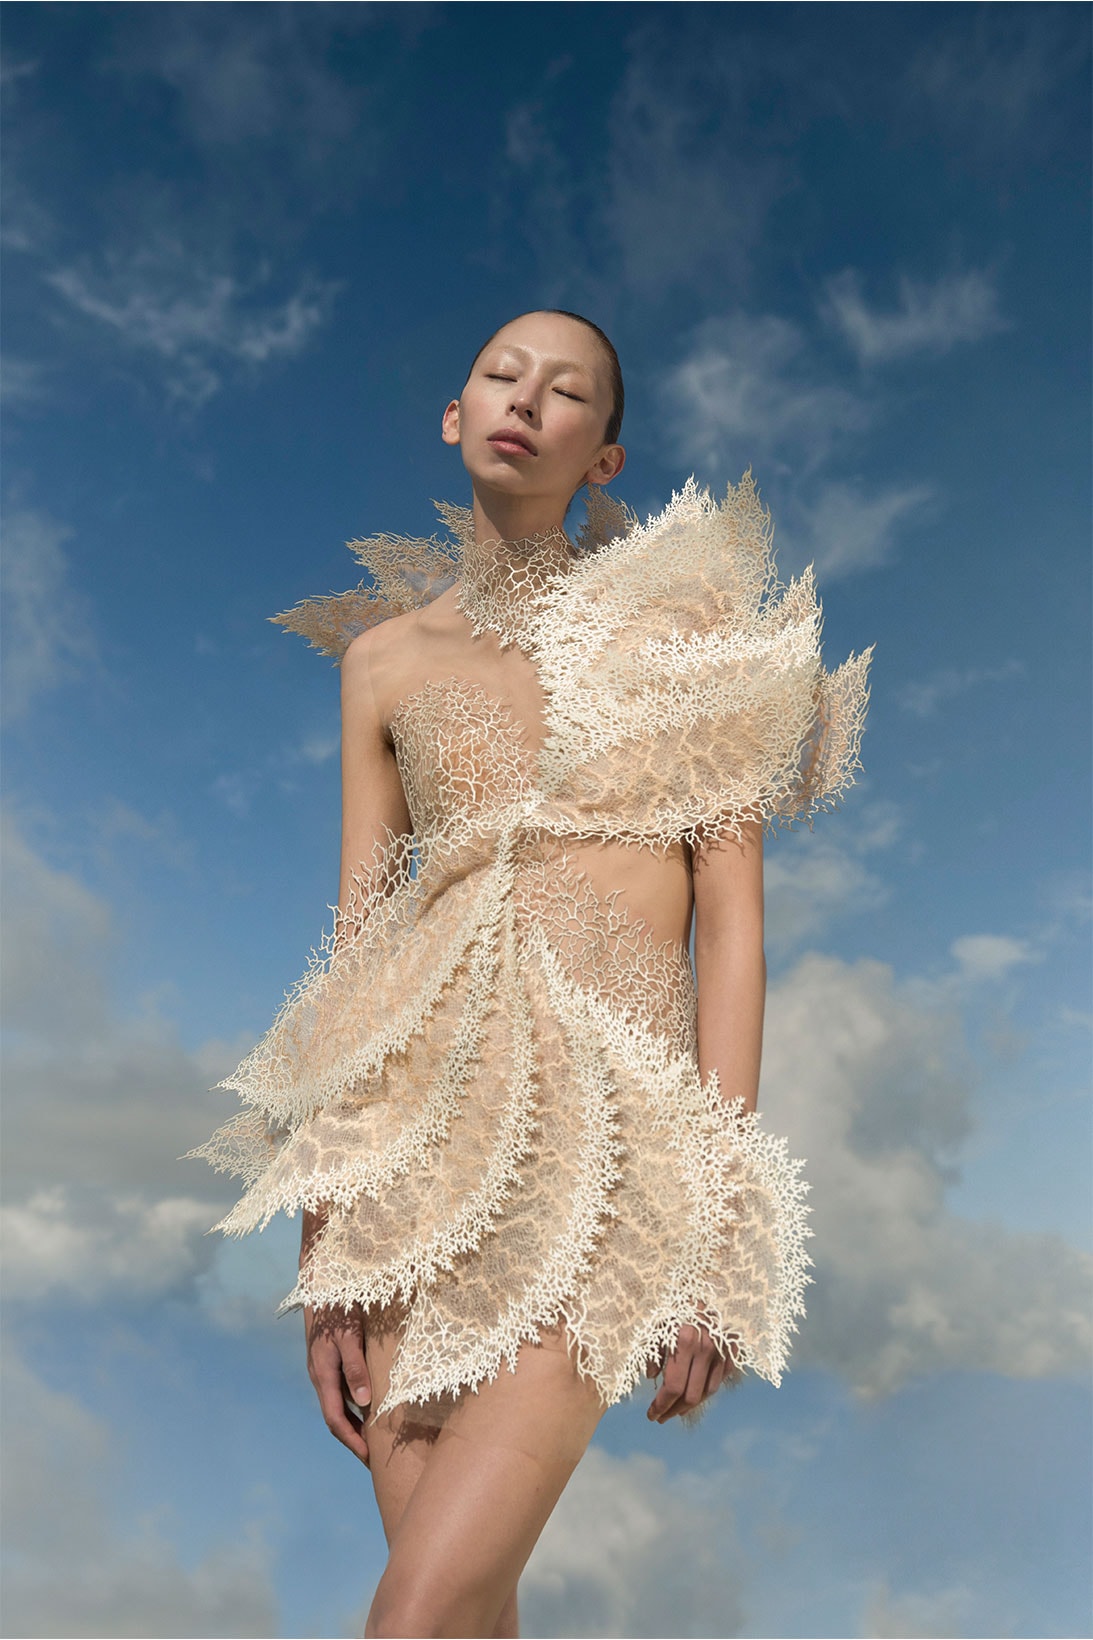 parley iris van herpen earthrise haute couture collaboration sustainable dress ocean plastic